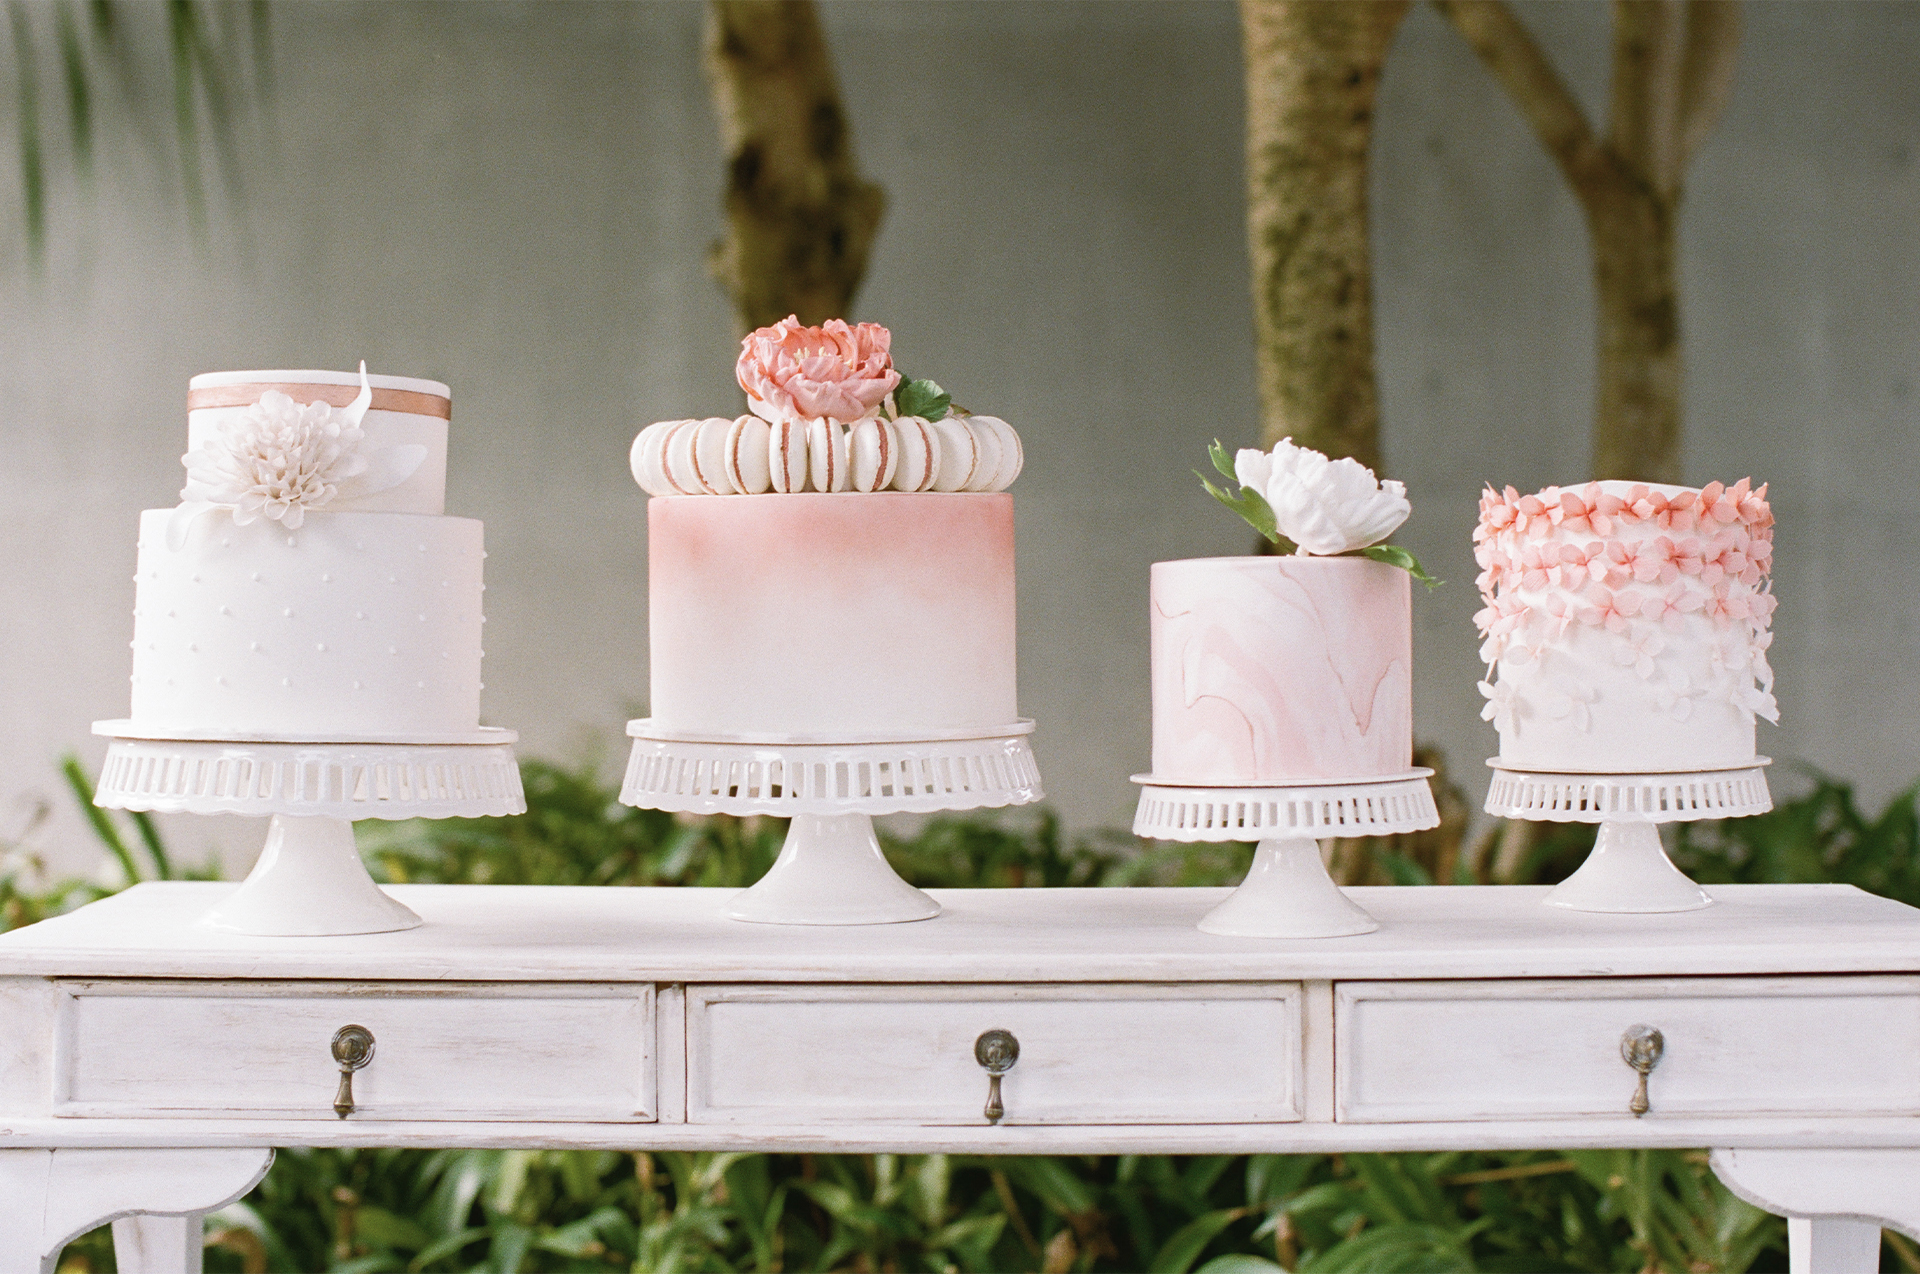 Wedding cakes on display table